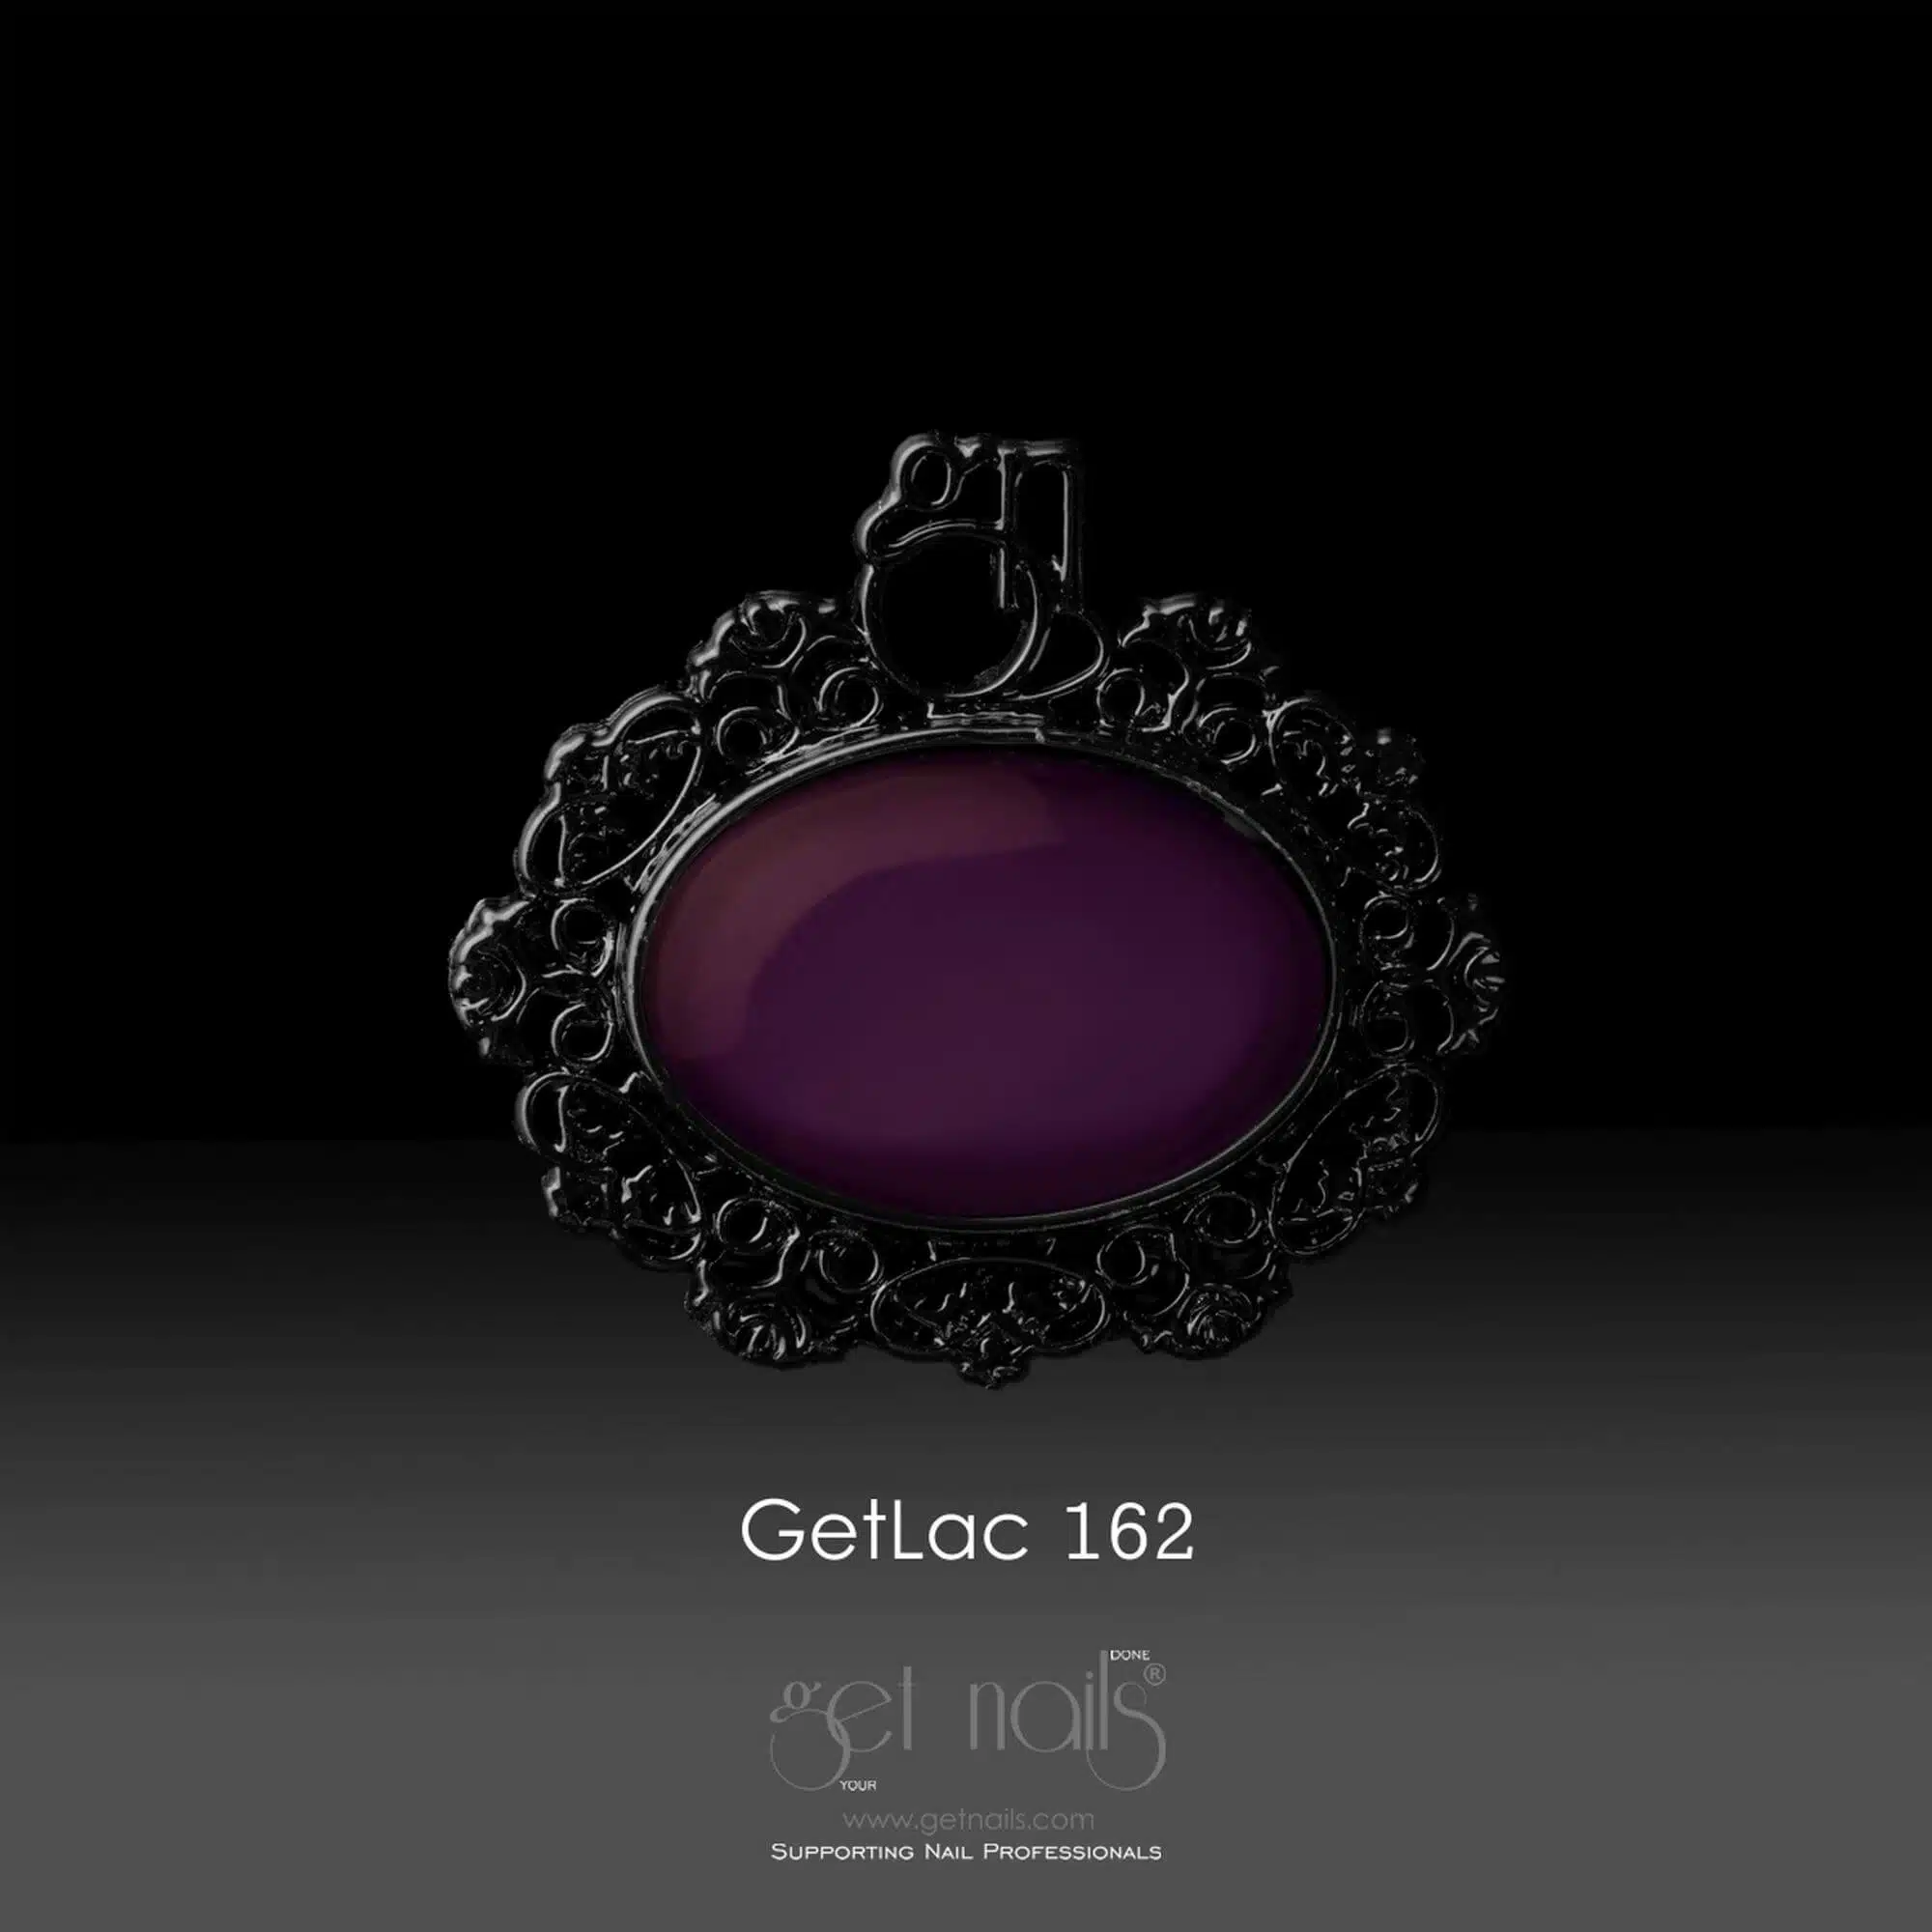 Get Nails Austria - GetLac 162 15g